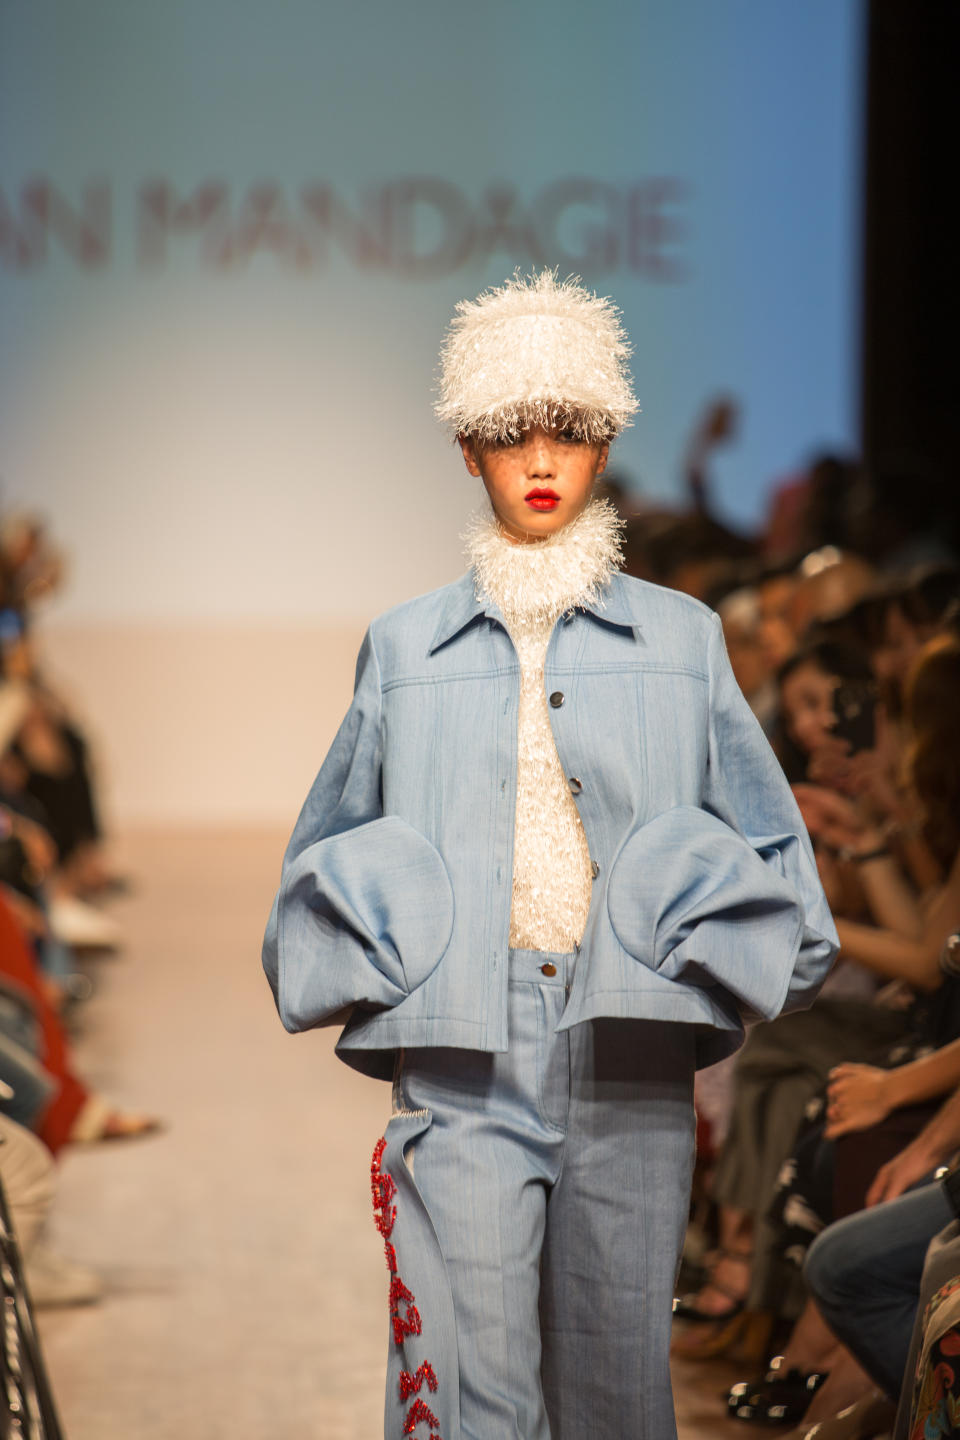 PHOTOS: Modest fashion debuts at Singapore Fashion Week